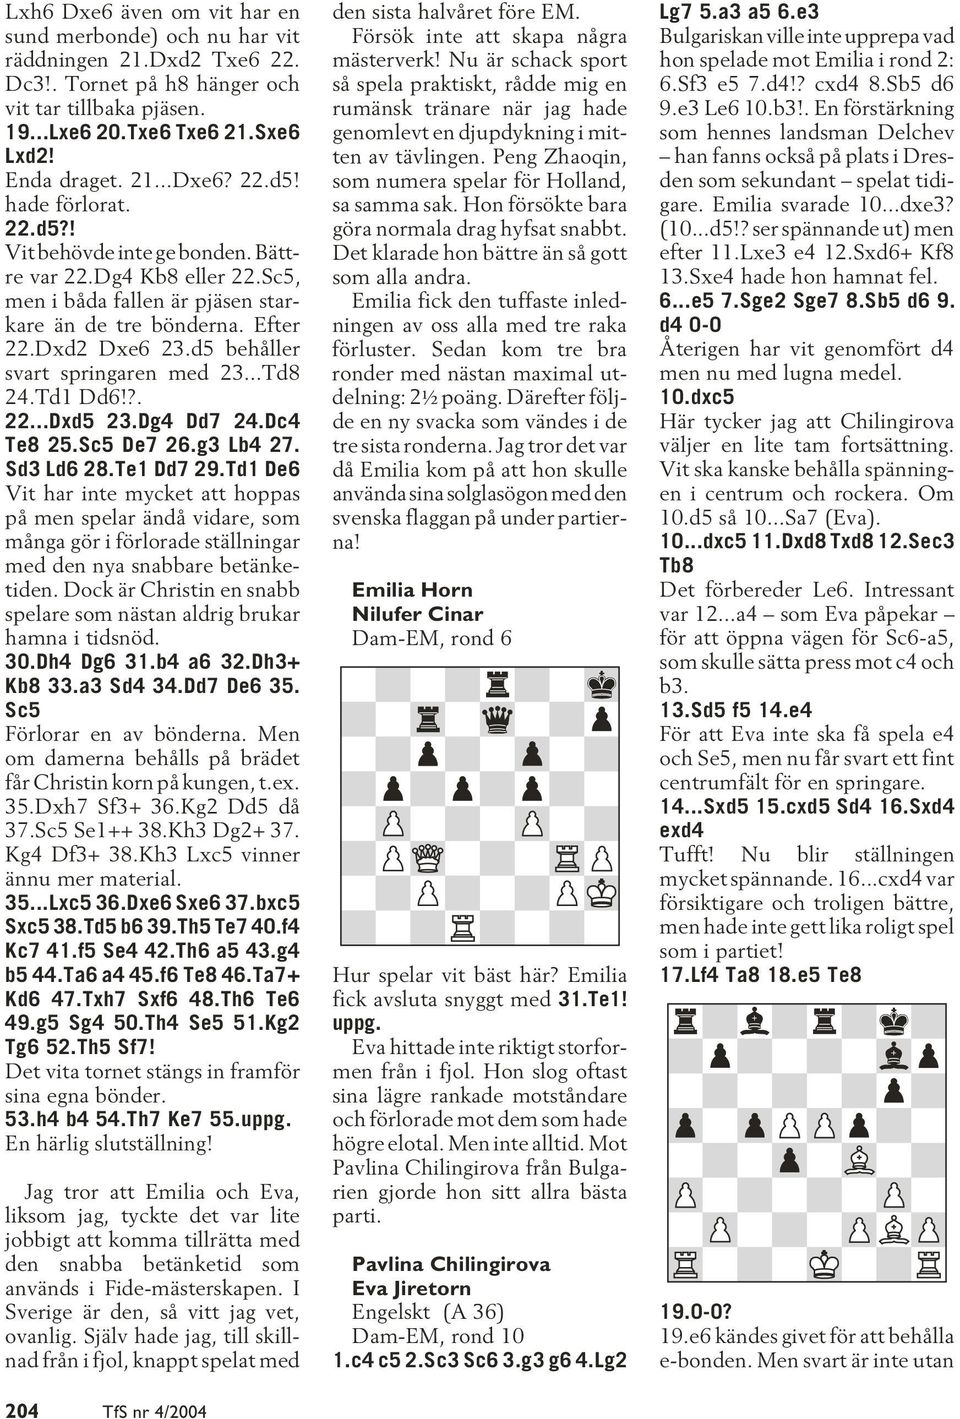 d5 behåller svart springaren med 23...Td8 24.Td1 Dd6!?. 22...Dxd5 23.Dg4 Dd7 24.Dc4 Te8 25.Sc5 De7 26.g3 Lb4 27. Sd3 Ld6 28.Te1 Dd7 29.